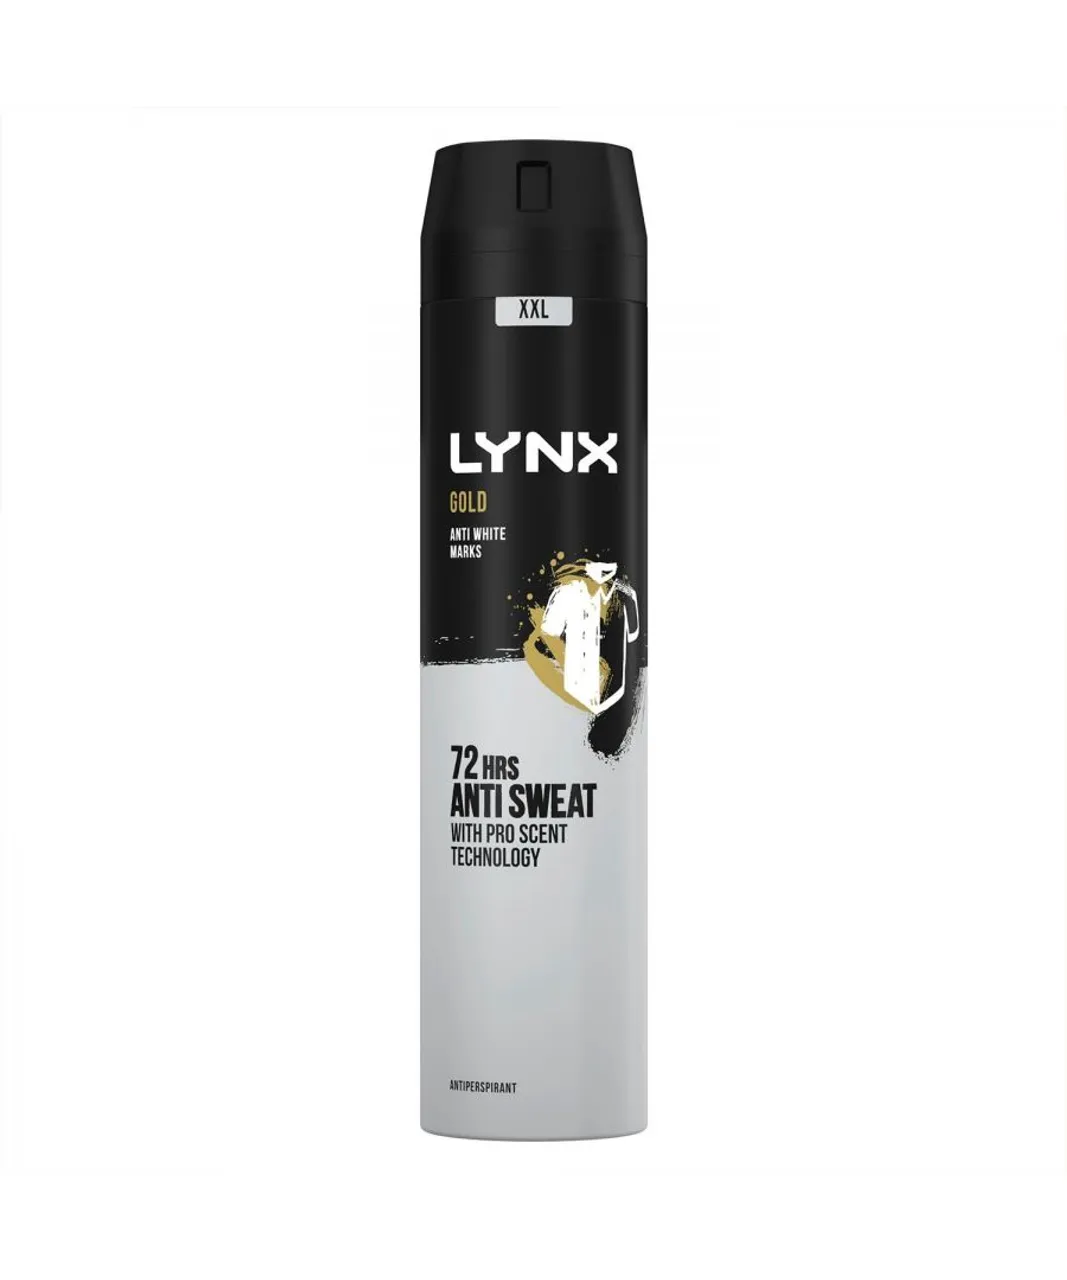 Lynx Mens XXL Gold 72H Sweat Protection Anti-Perspirant Deodorant 3x250ml - One Size